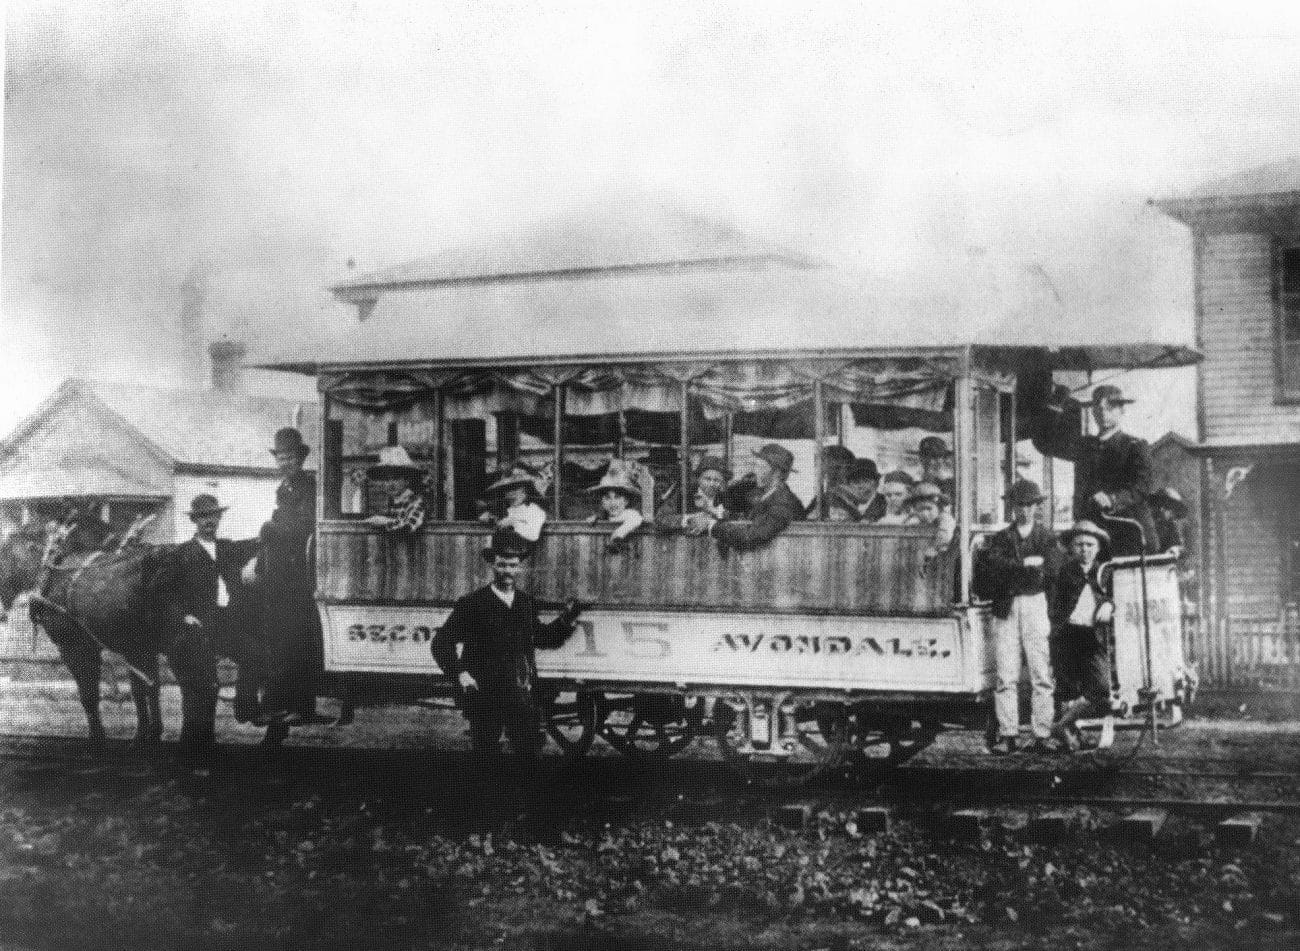 Birmingham Mule-drawn Streetcar, ca. 1887